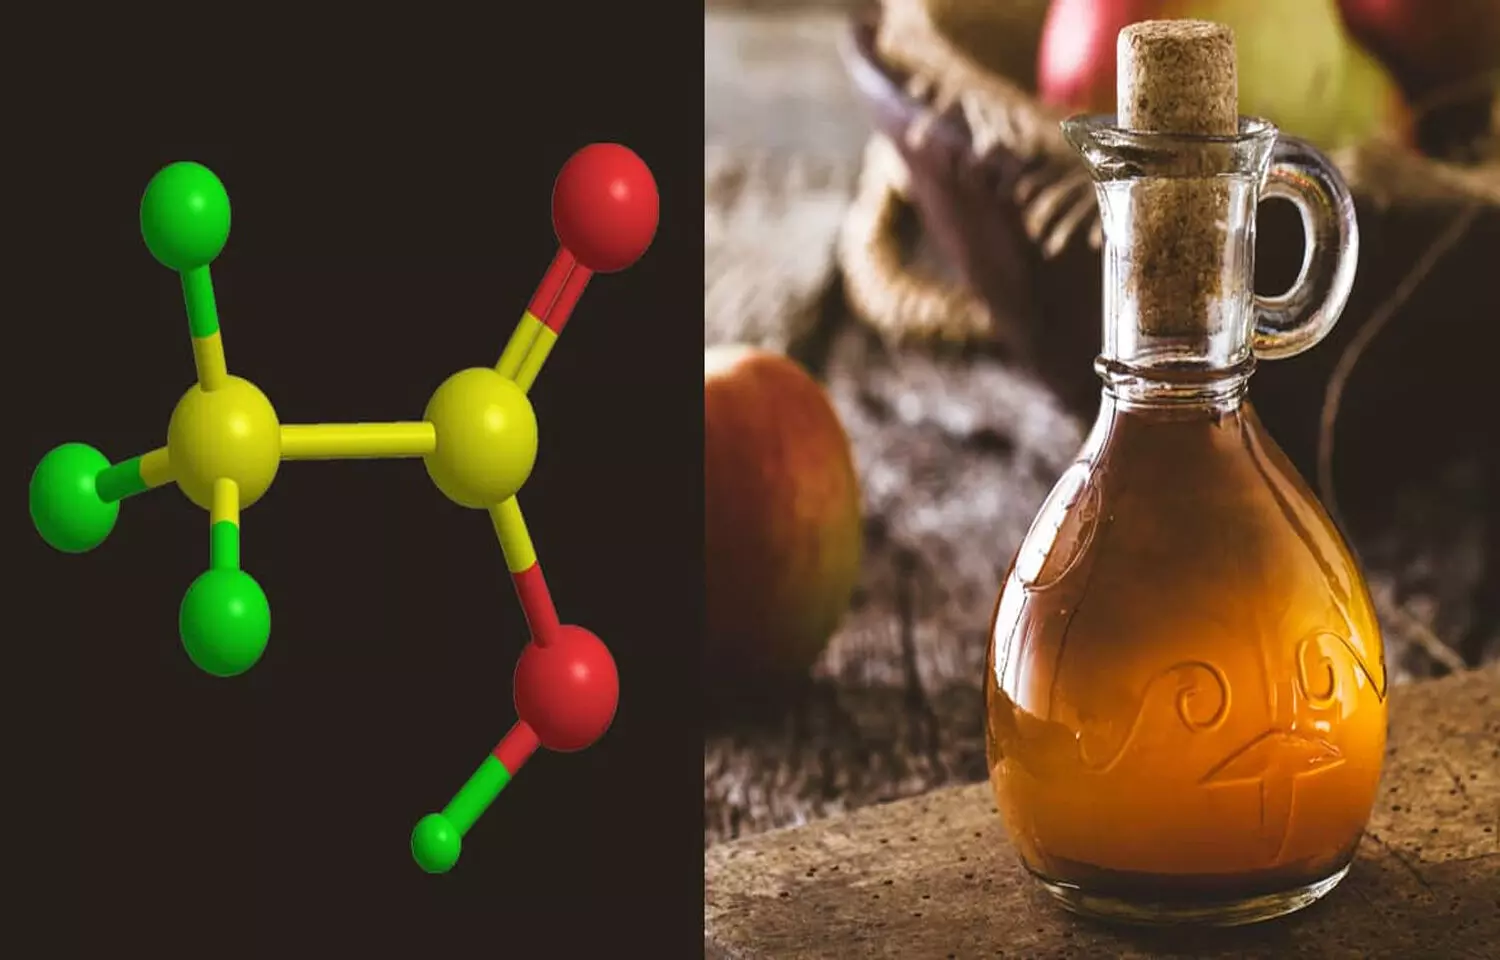 Apple cider vinegar may reduce fasting blood sugar in type 2 diabetes: Study